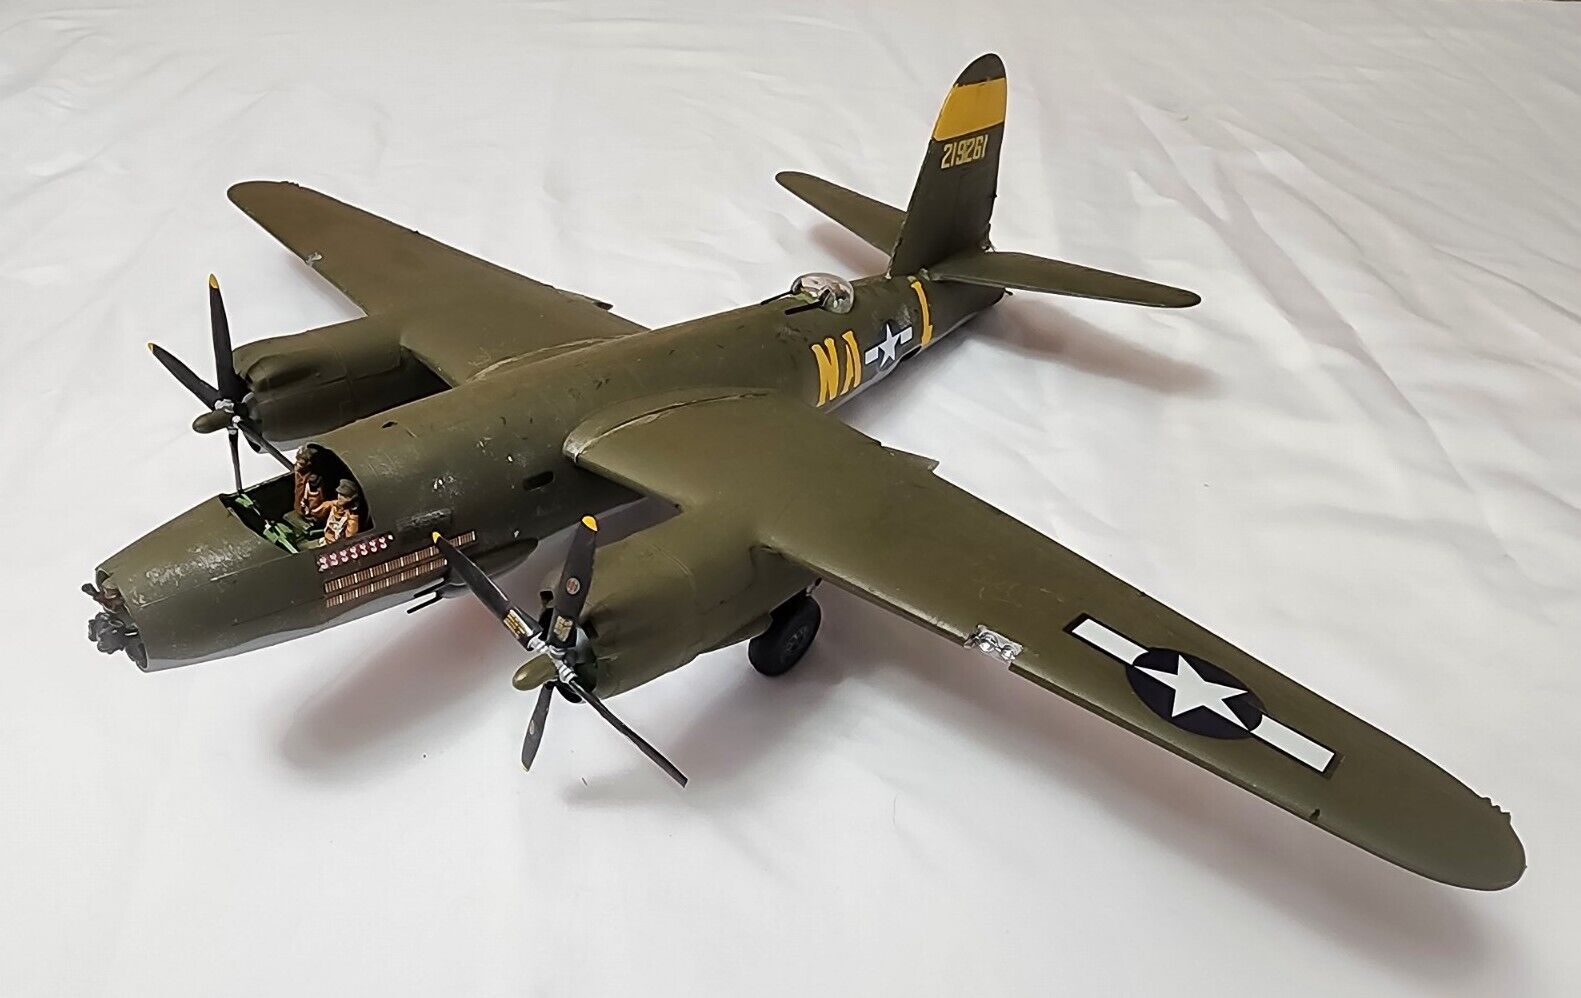 Monogram 1/48 Scale WW II B-26 Marauder - Built, Great for Diorama - READ